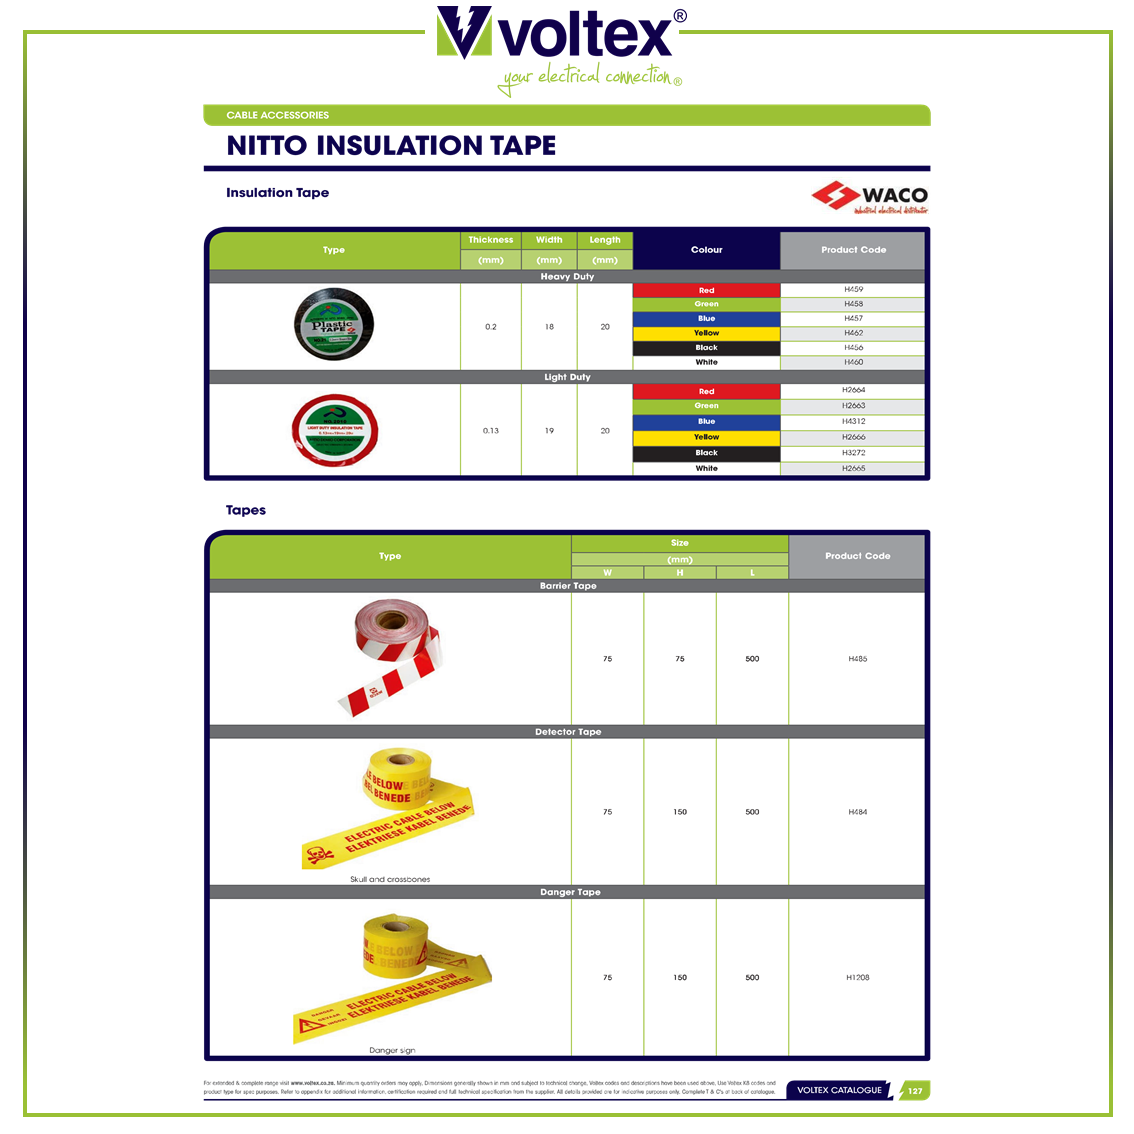 VOLTEX - Nitto Insulation Tape Catalogue